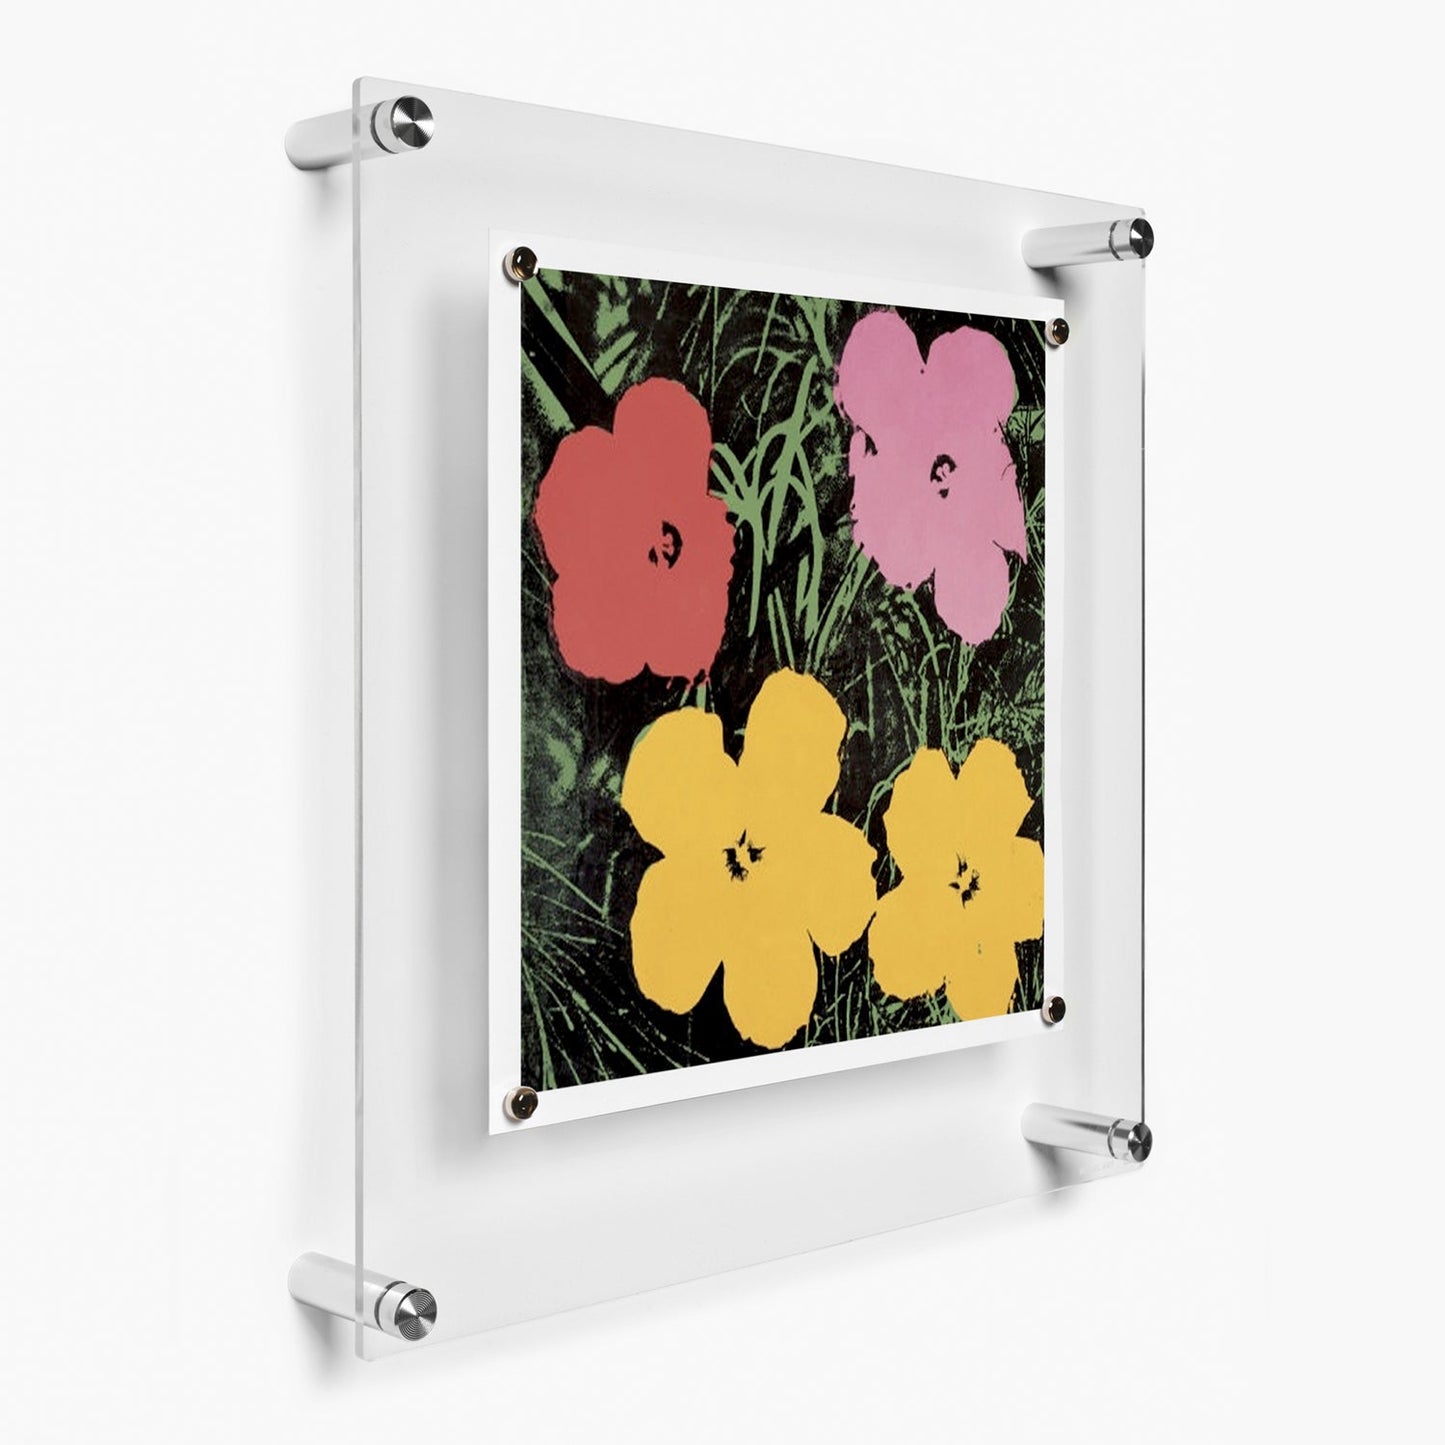 WS Single: 14" x 14" Single Panel Frame + Magnets